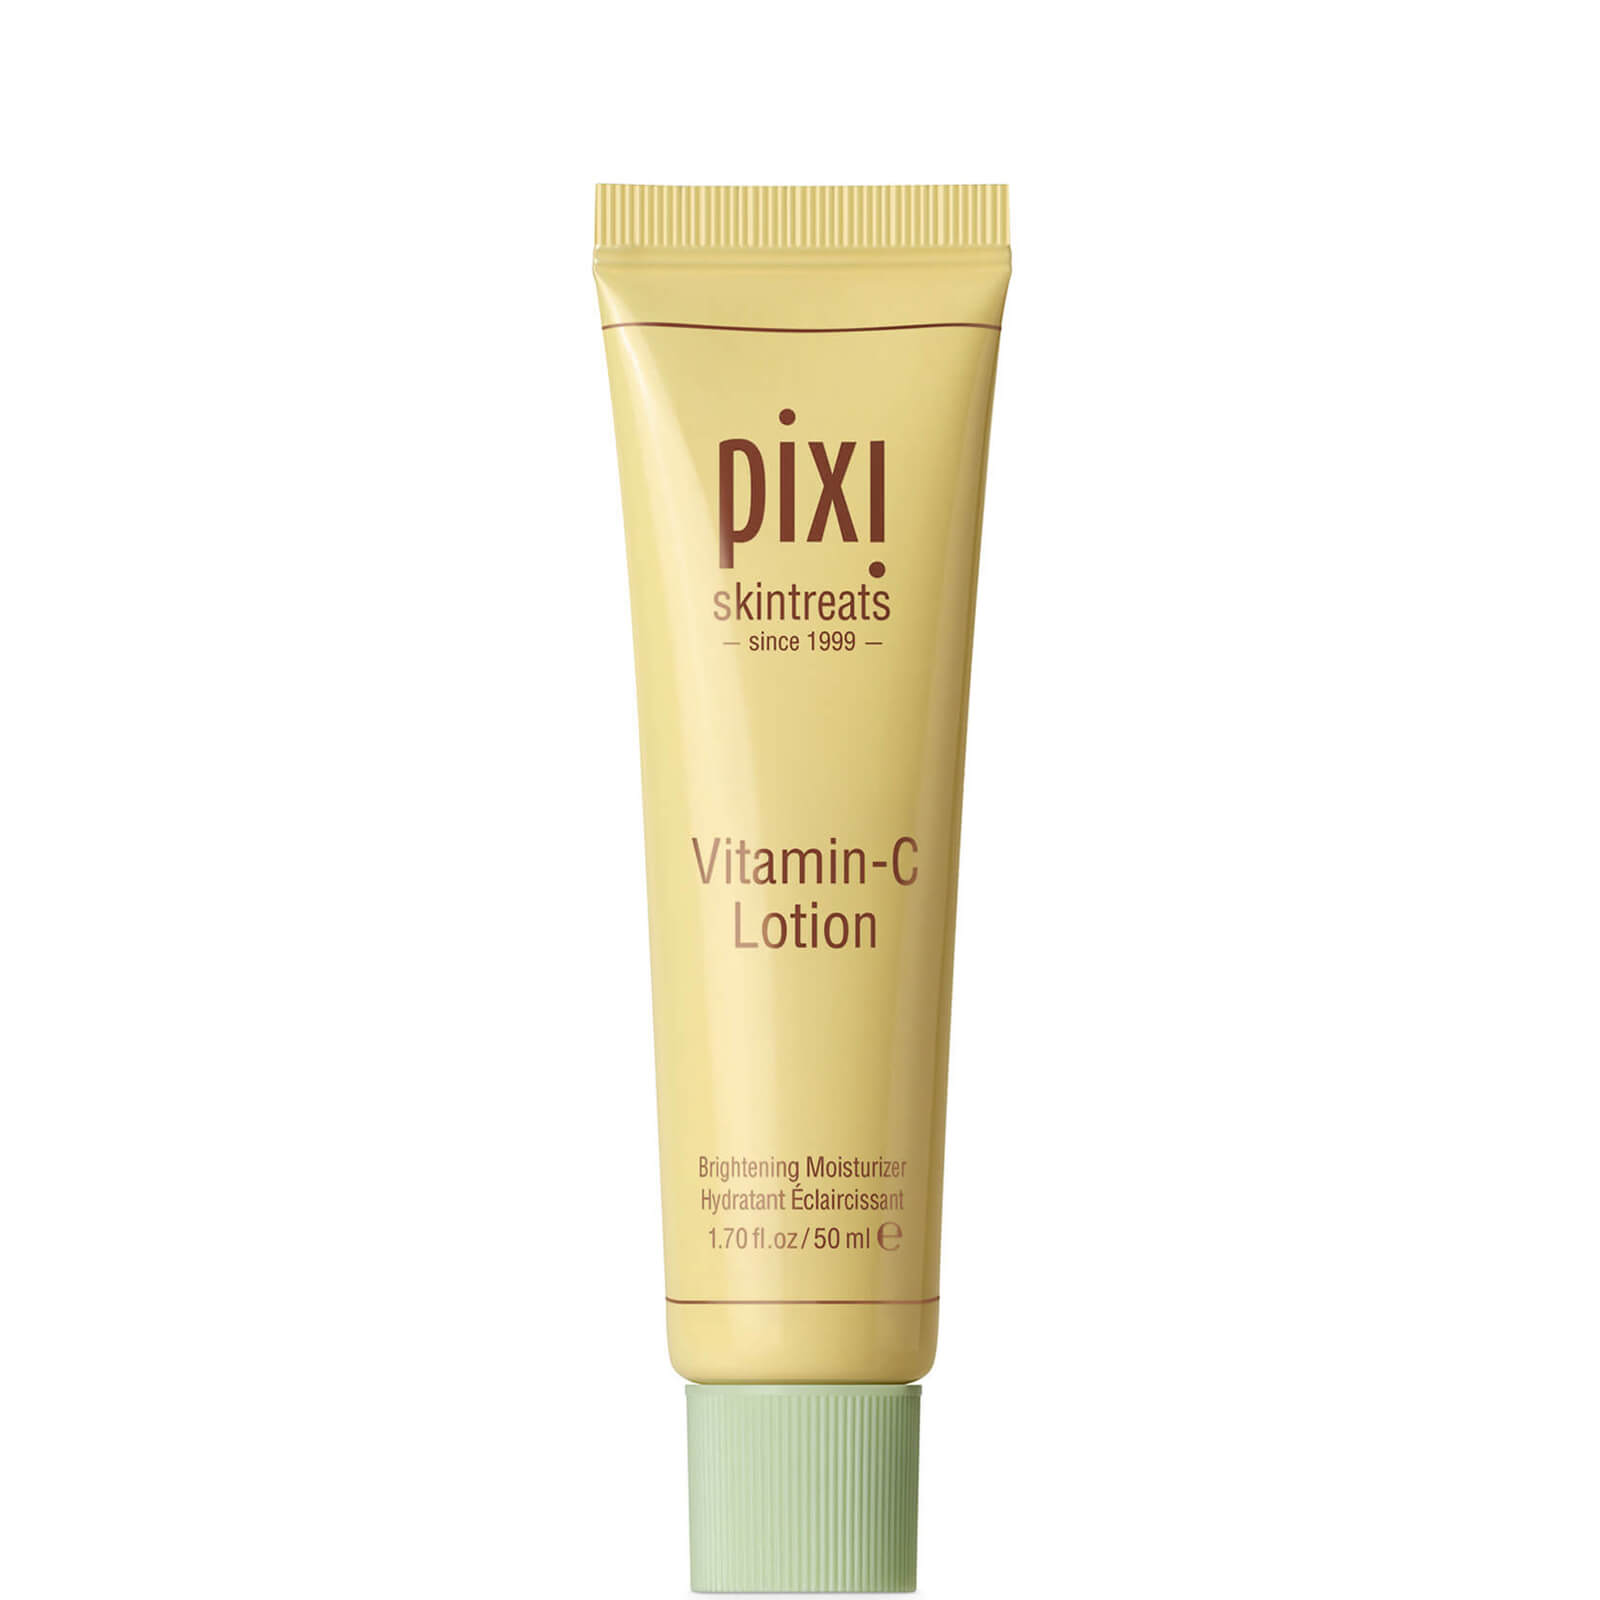 Image of PIXI Vitamin-C Lotion 50ml Moisturizer